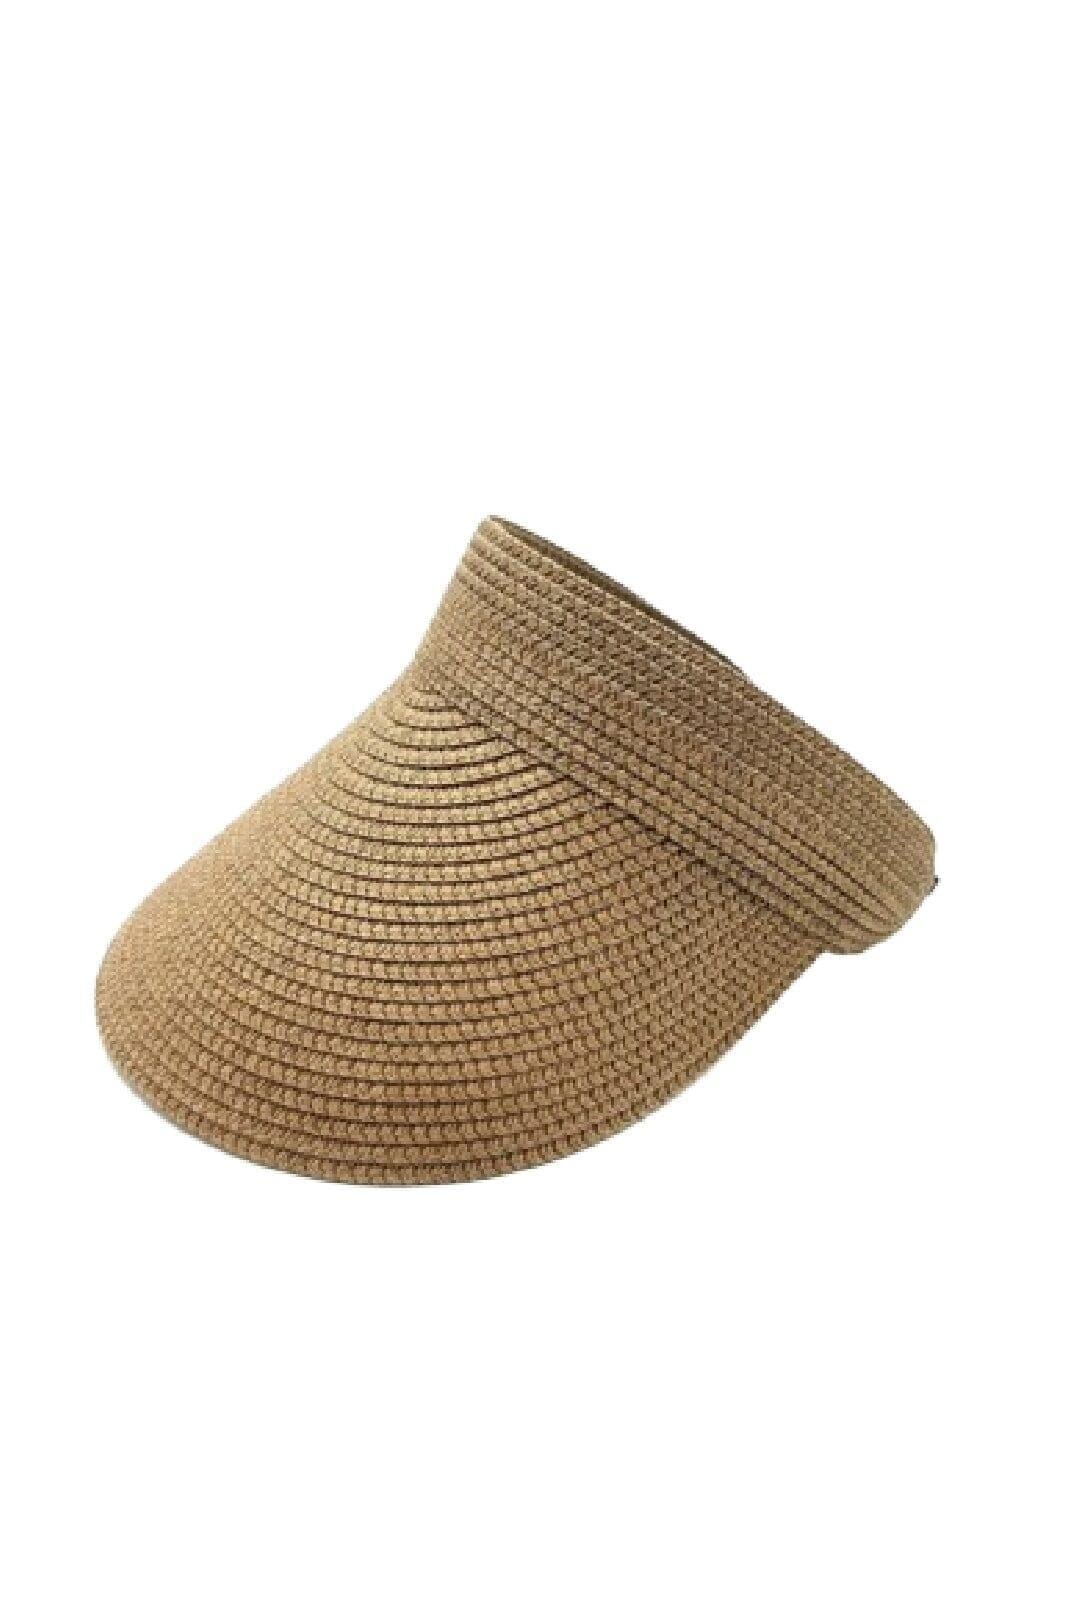 Anobel Copenhagen - Visor Straw Elastic Hat Xm3090 - Brown Hatte 